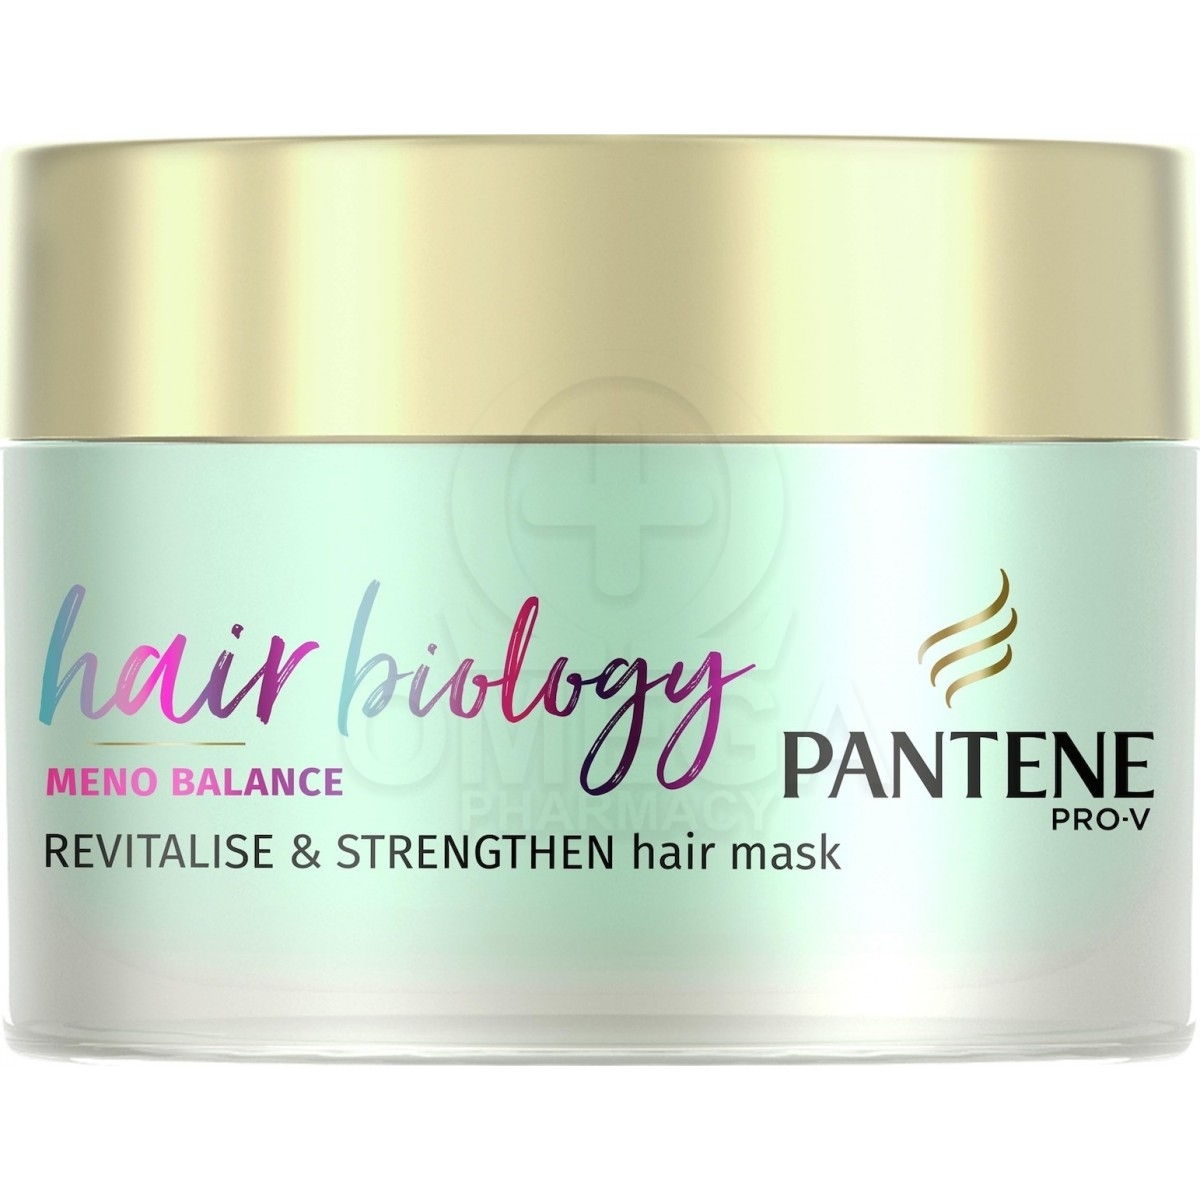 PANTENE Hair Biology Revitalize & Strengthen Mask Μάσκα Μαλλιών για Θαμπά  Μαλλιά 160ml